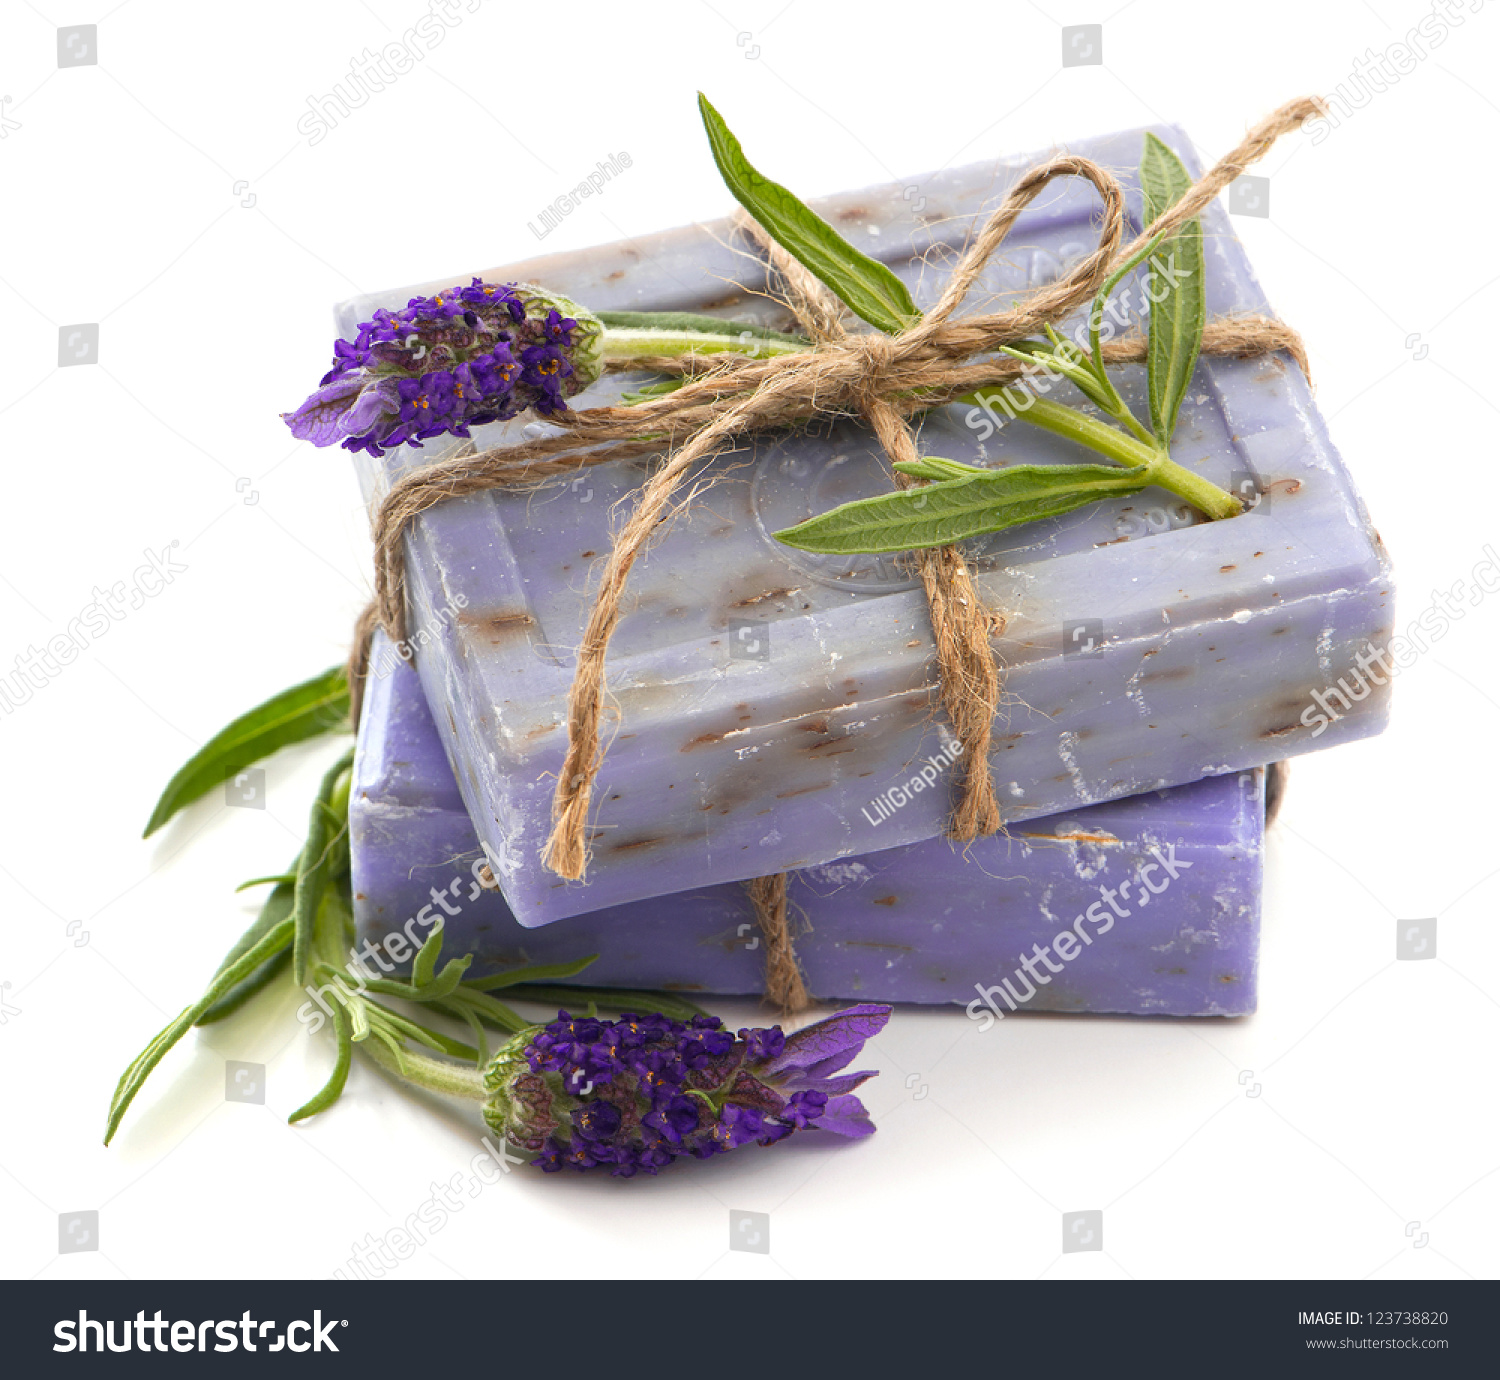 Closeup Lavender Soap Bars Fresh Blossoms Stock Photo 123738820 ...